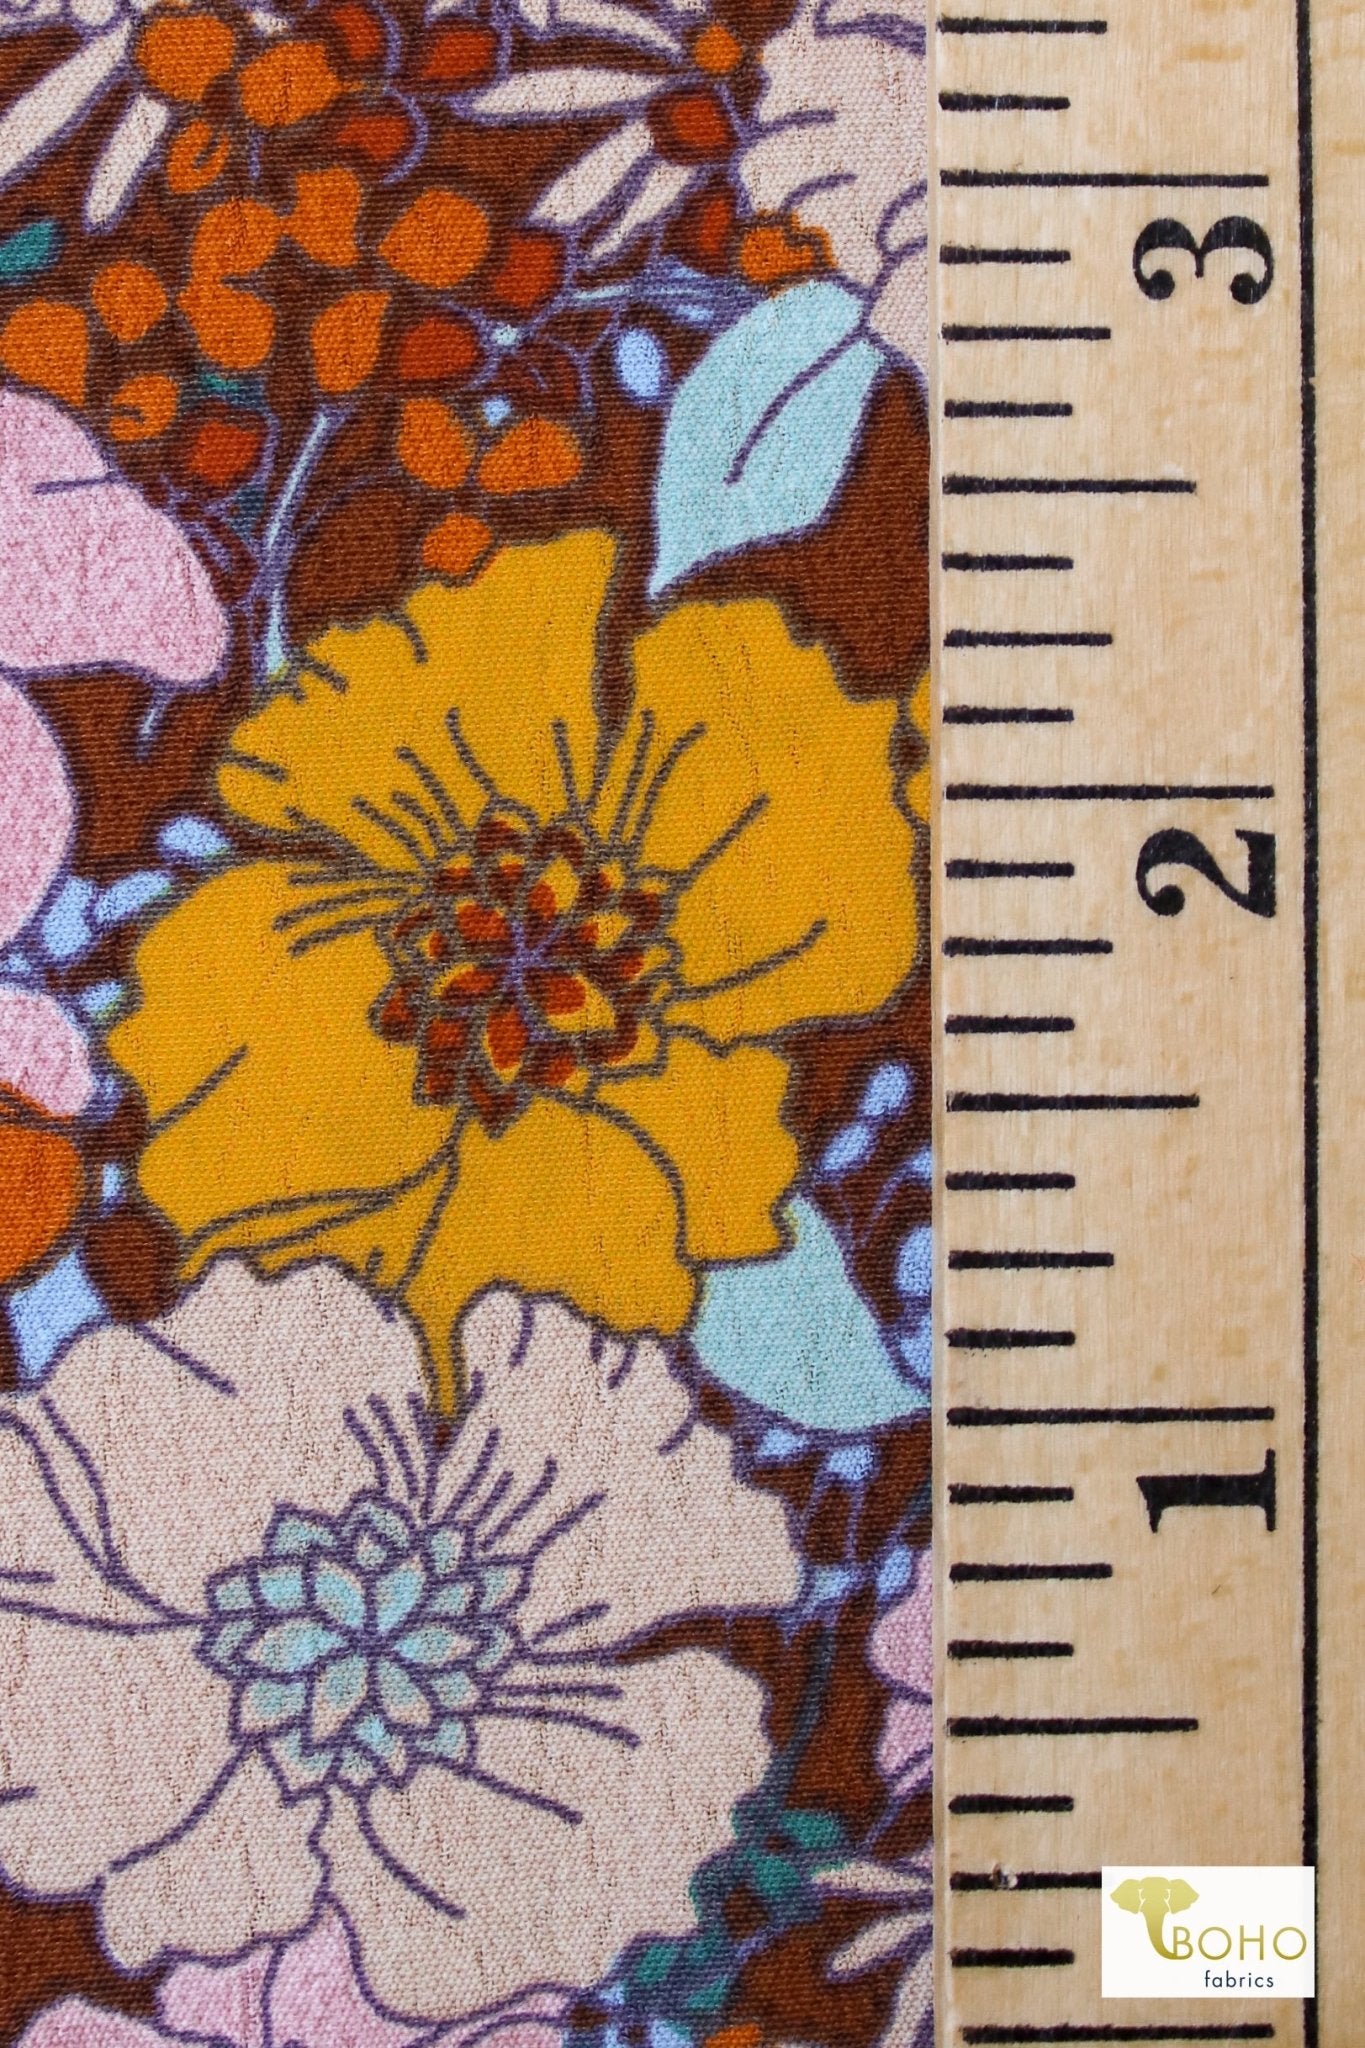 Retro Poppies, Georgette Woven Print - Boho Fabrics